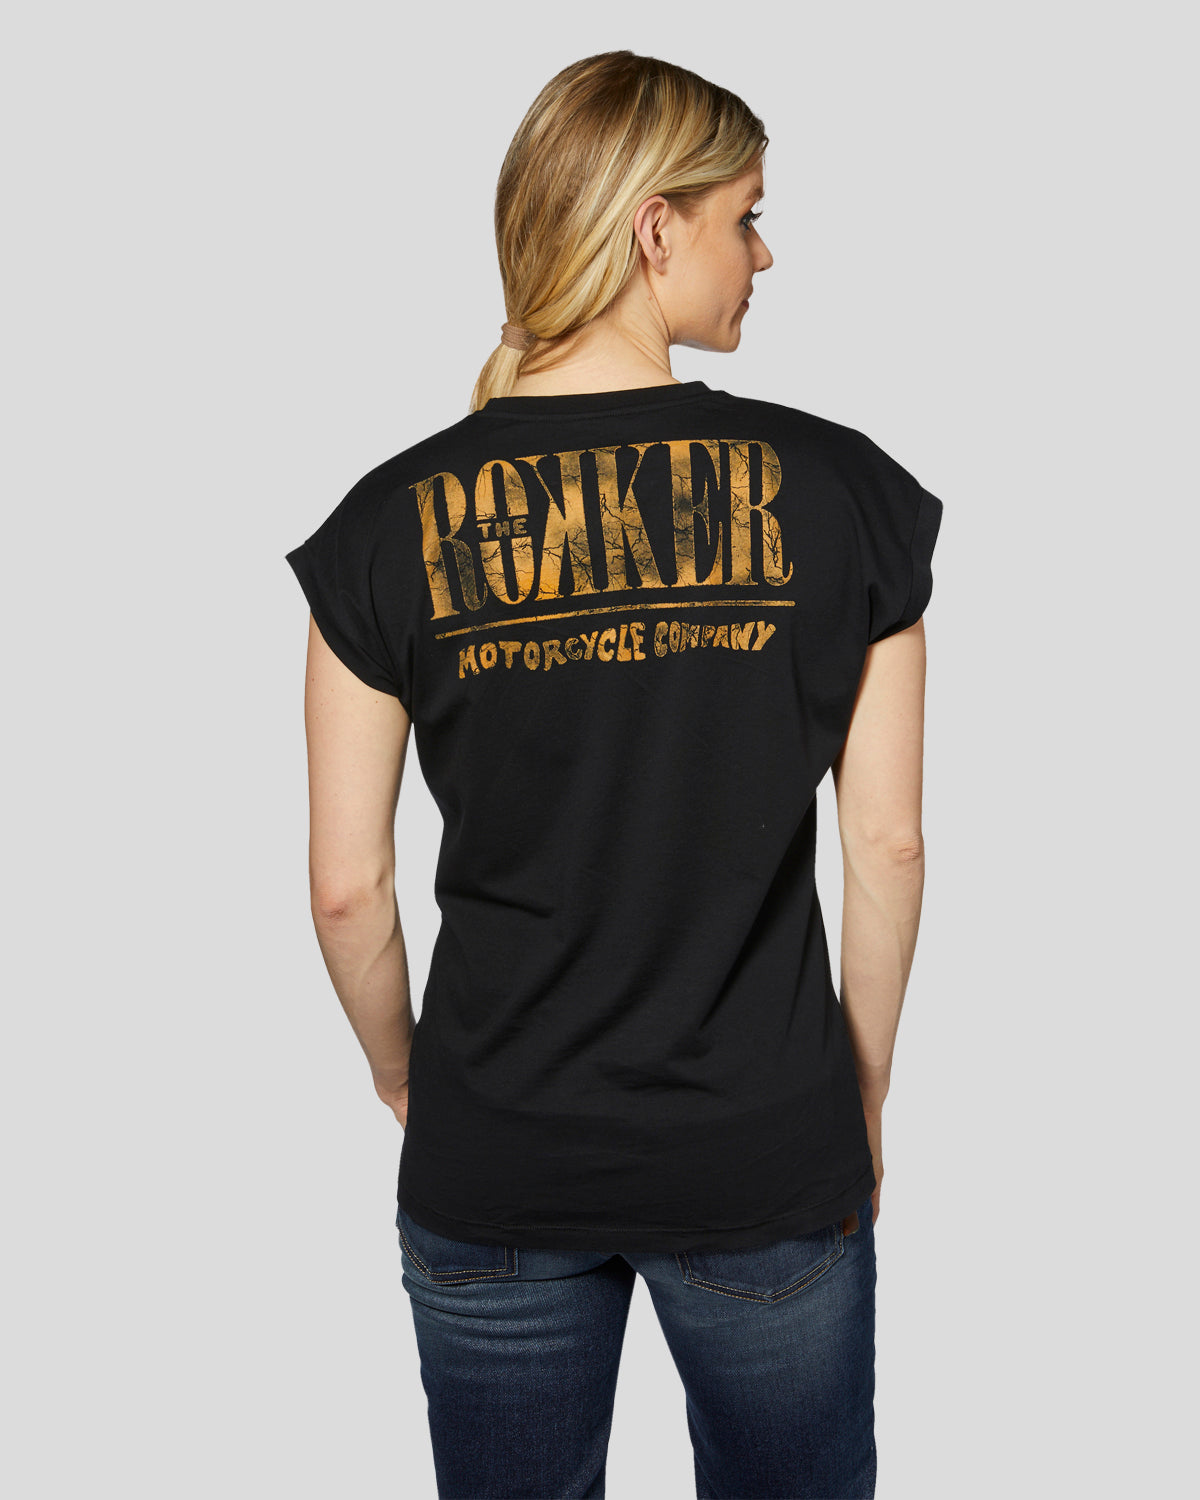 Kurt Lady T-Shirt Black Shirts & Tops The Rokker Company 